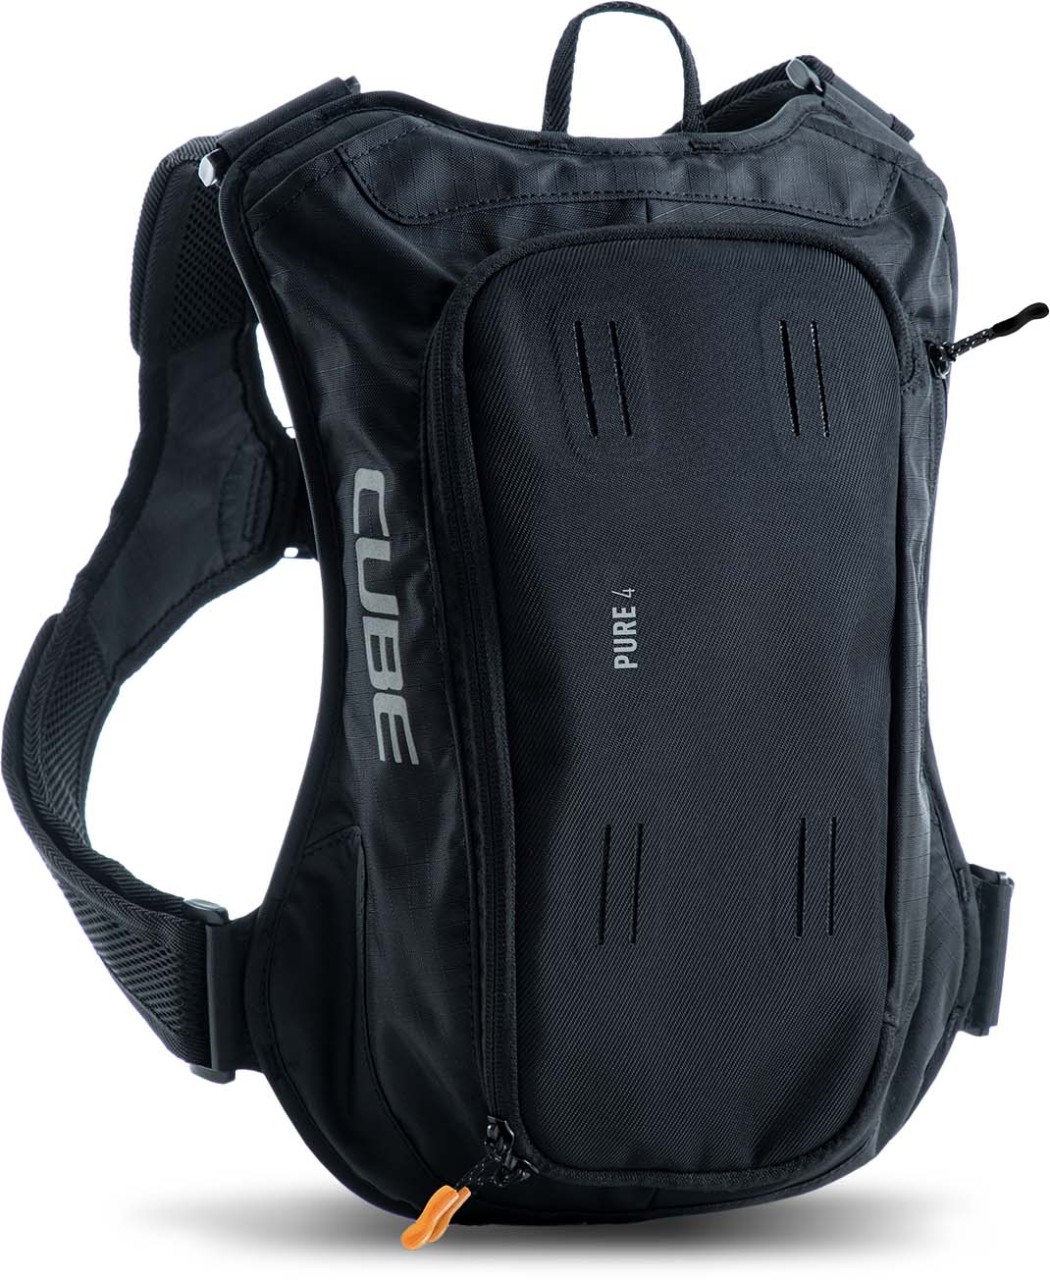 Cube Backpack PURE 4 black